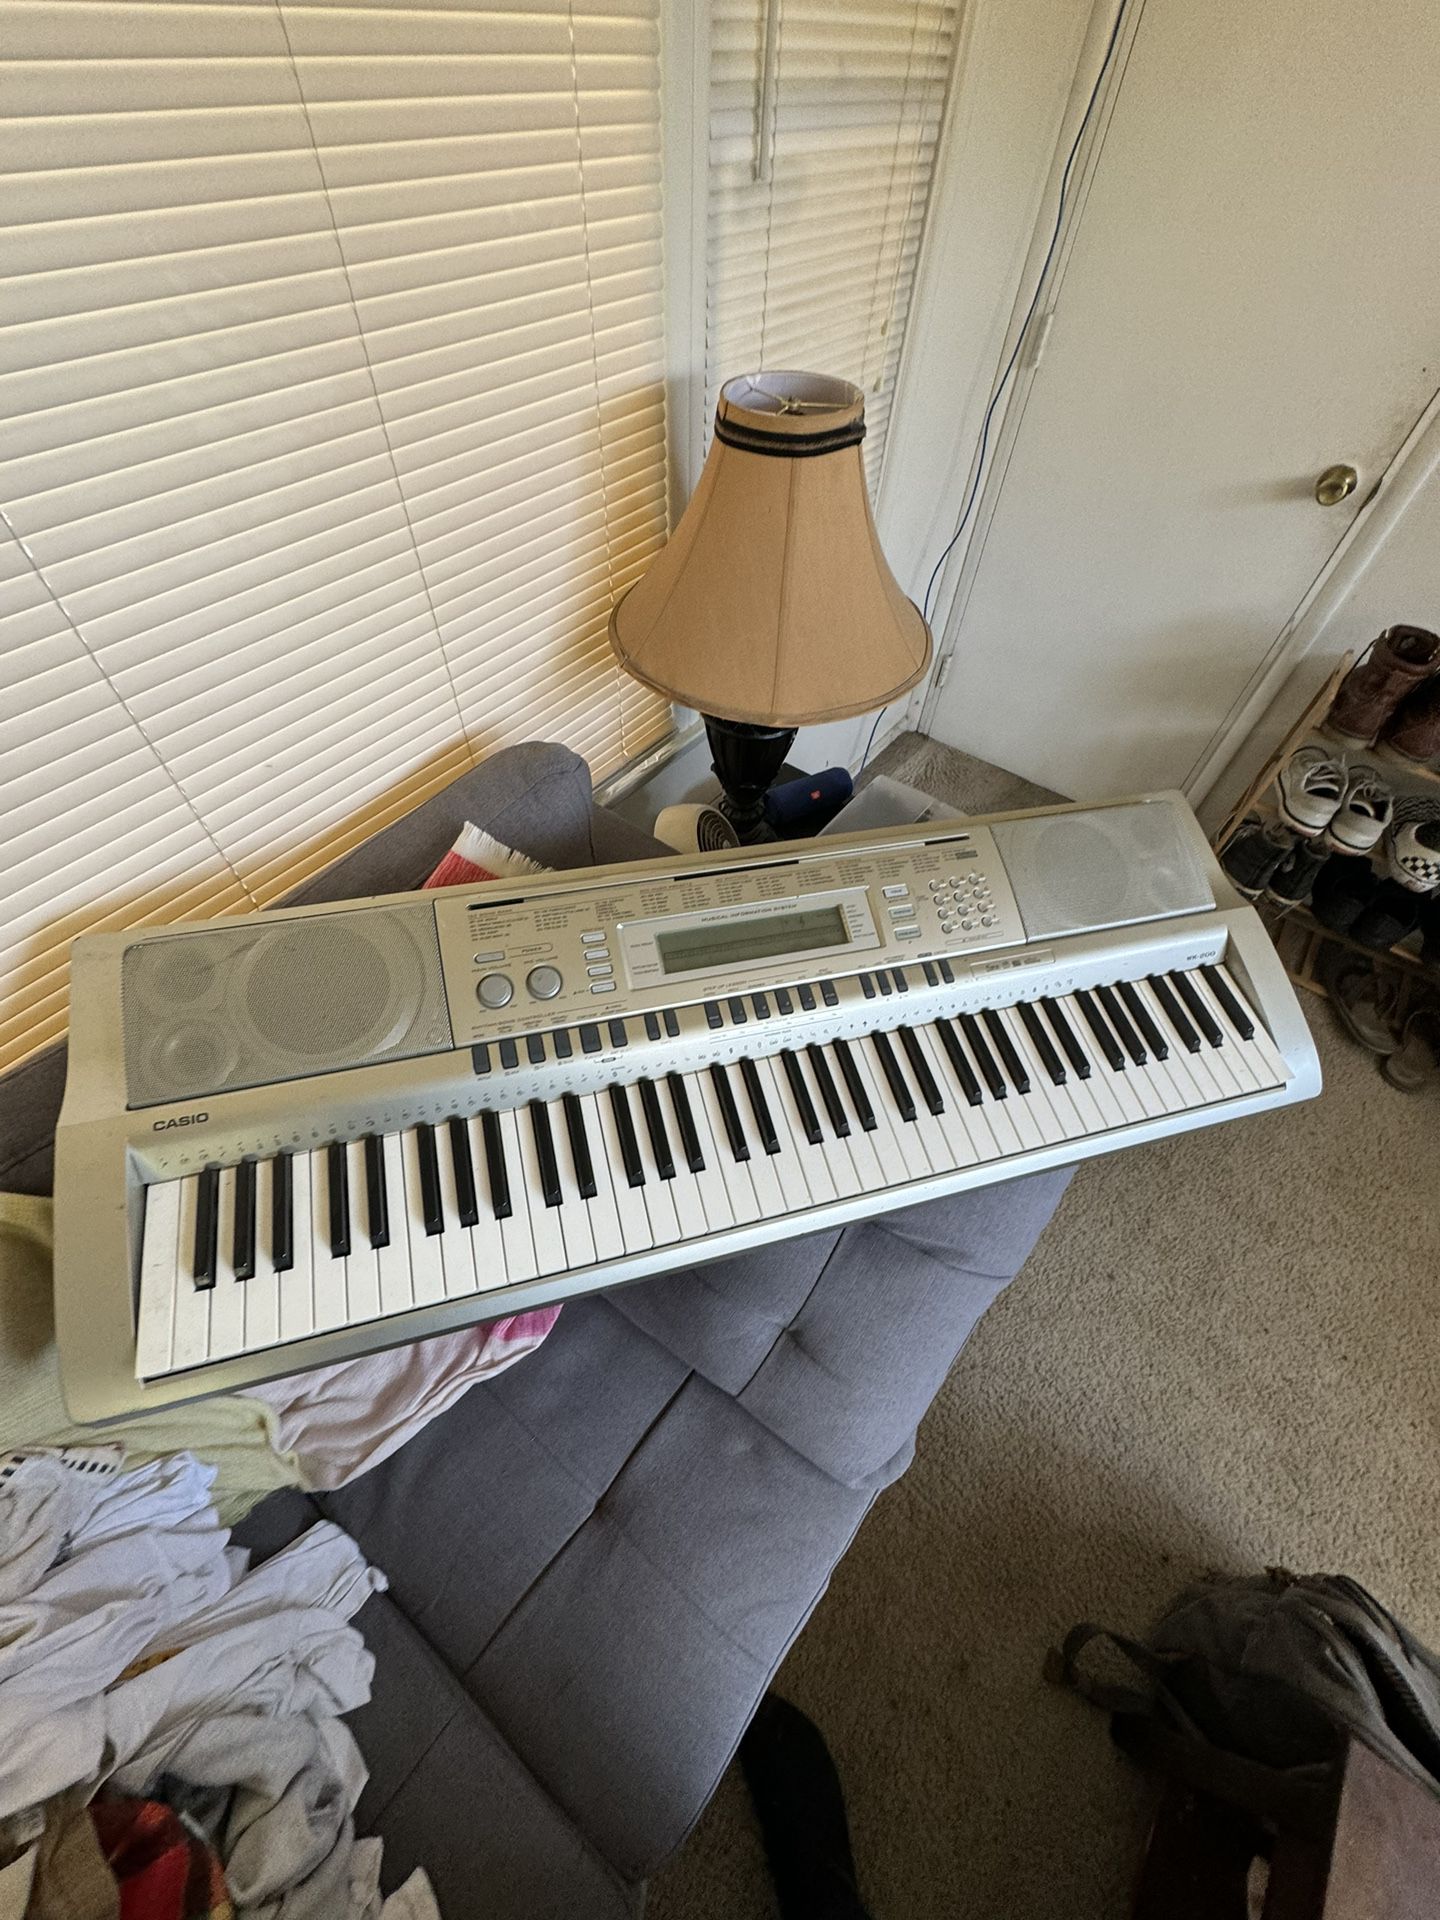 Casio WK 200 keyboard Piano - North Hollywood Sun Valley 